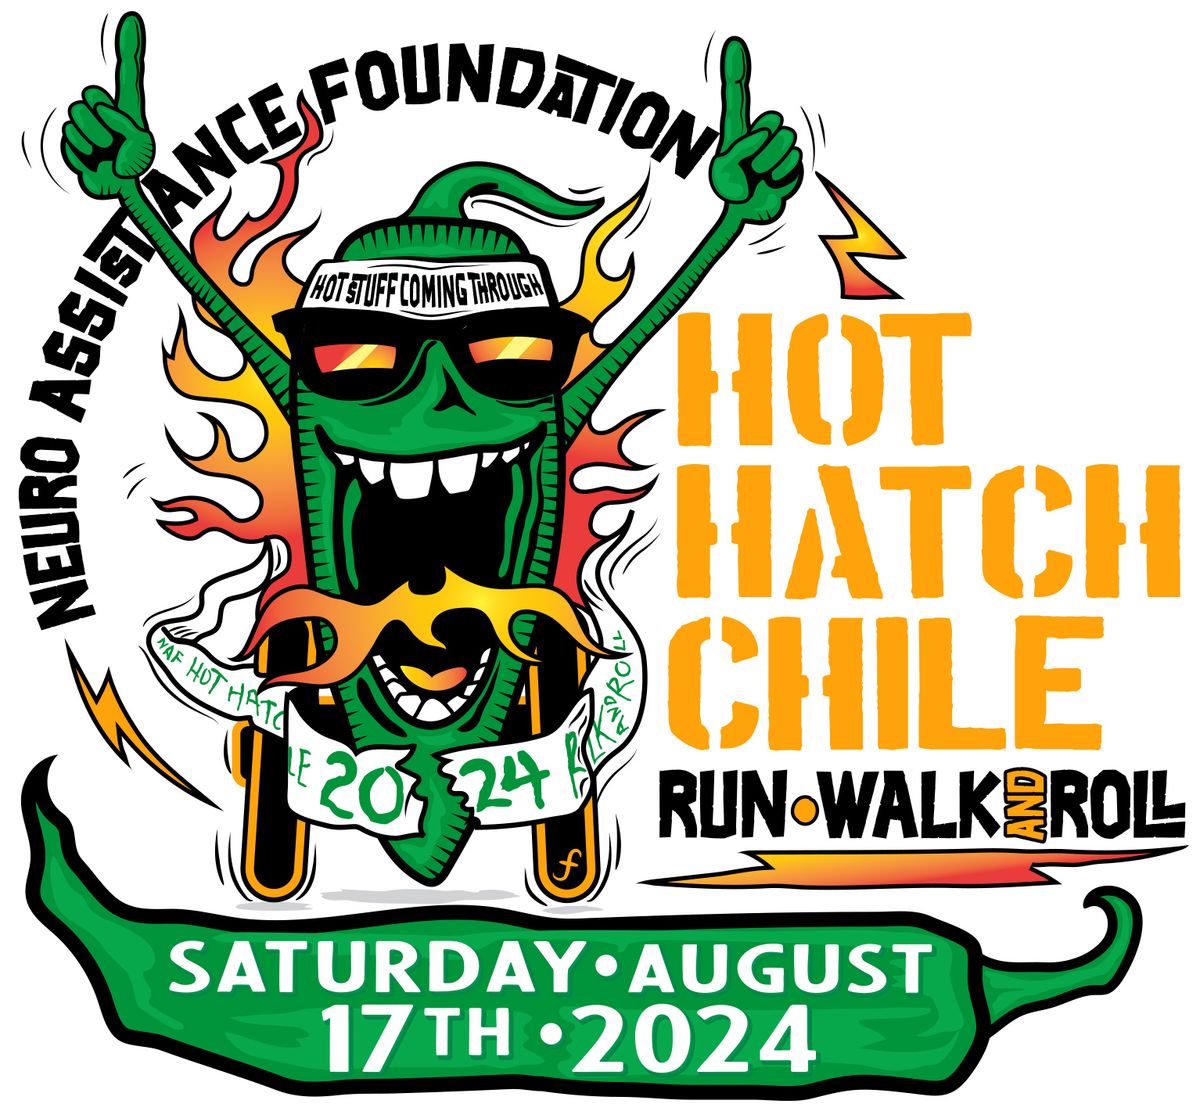 Neuro Assistance Foundation Annual Hot Hatch Chile Run, Walk, & Roll